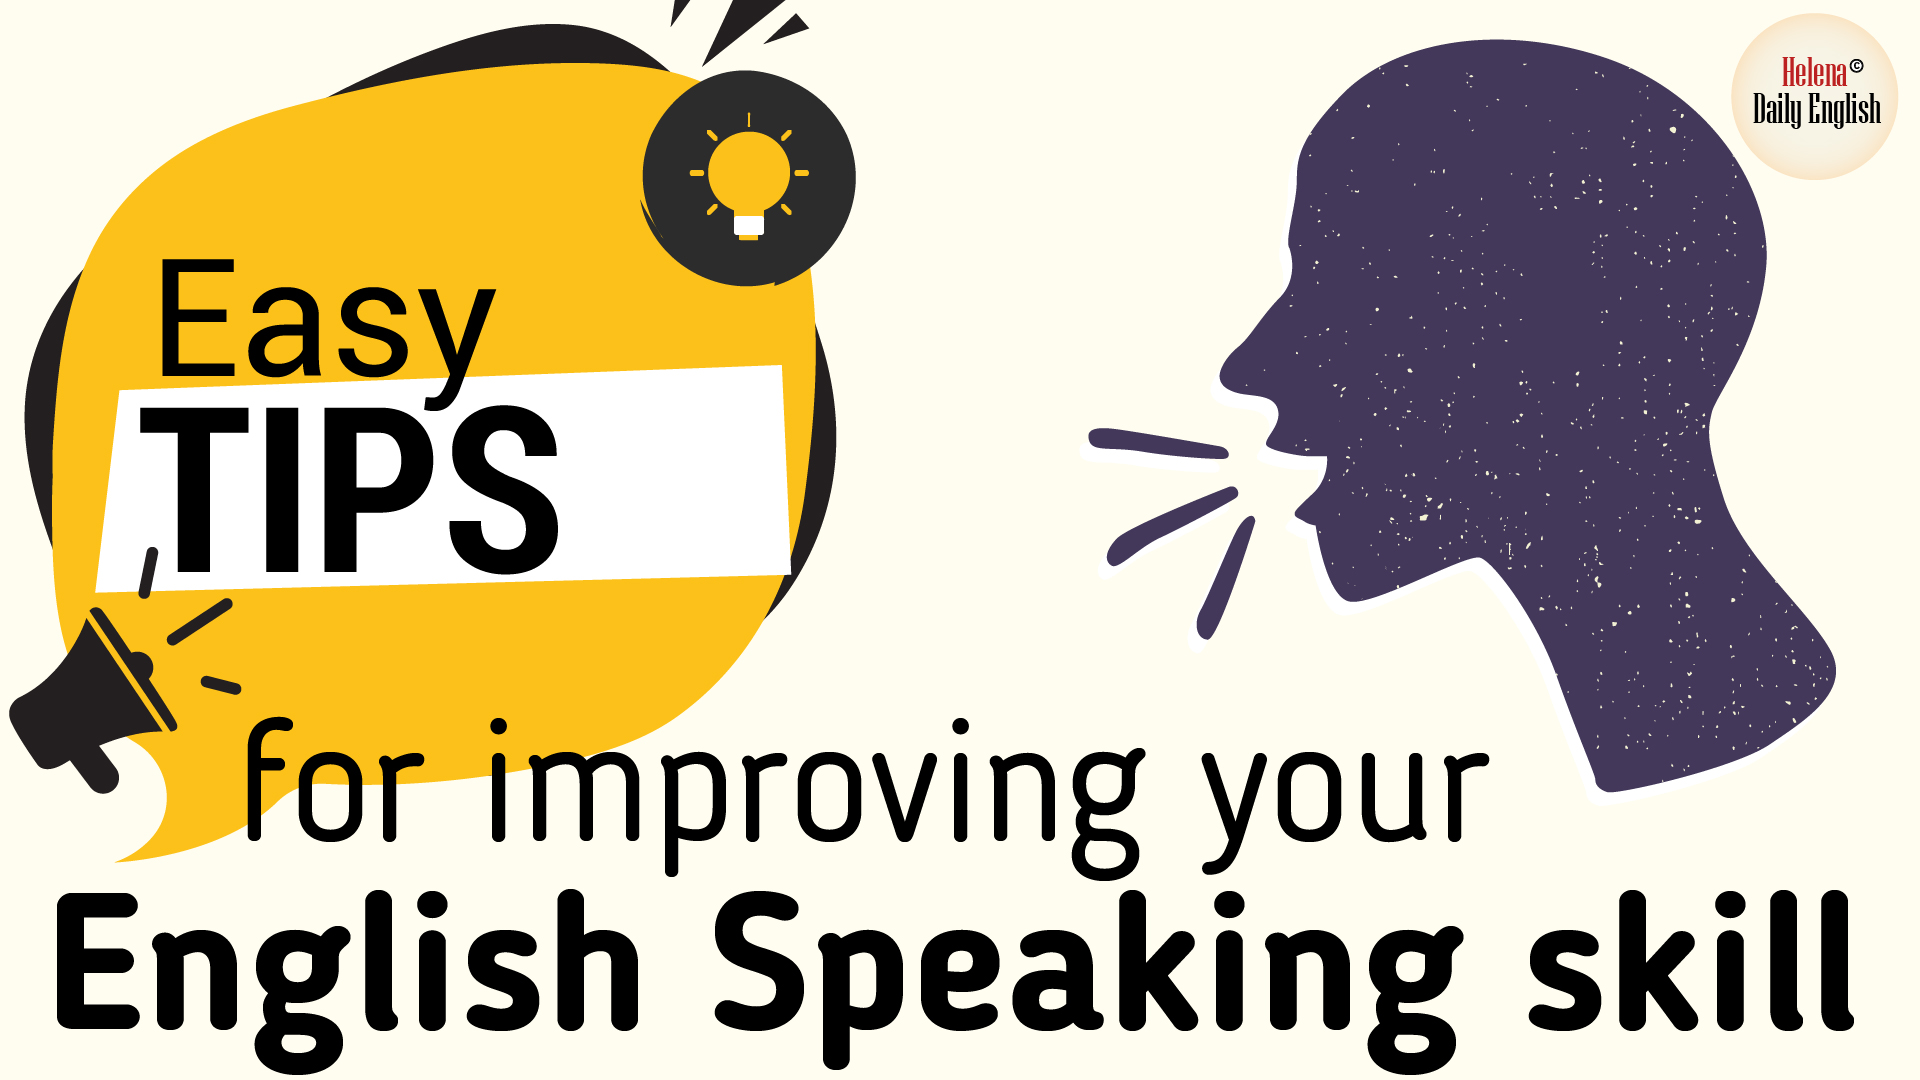 Improved speaking skills. English skills. How to improve speaking skills. Improving speaking skills in English. How to learn English effectively.